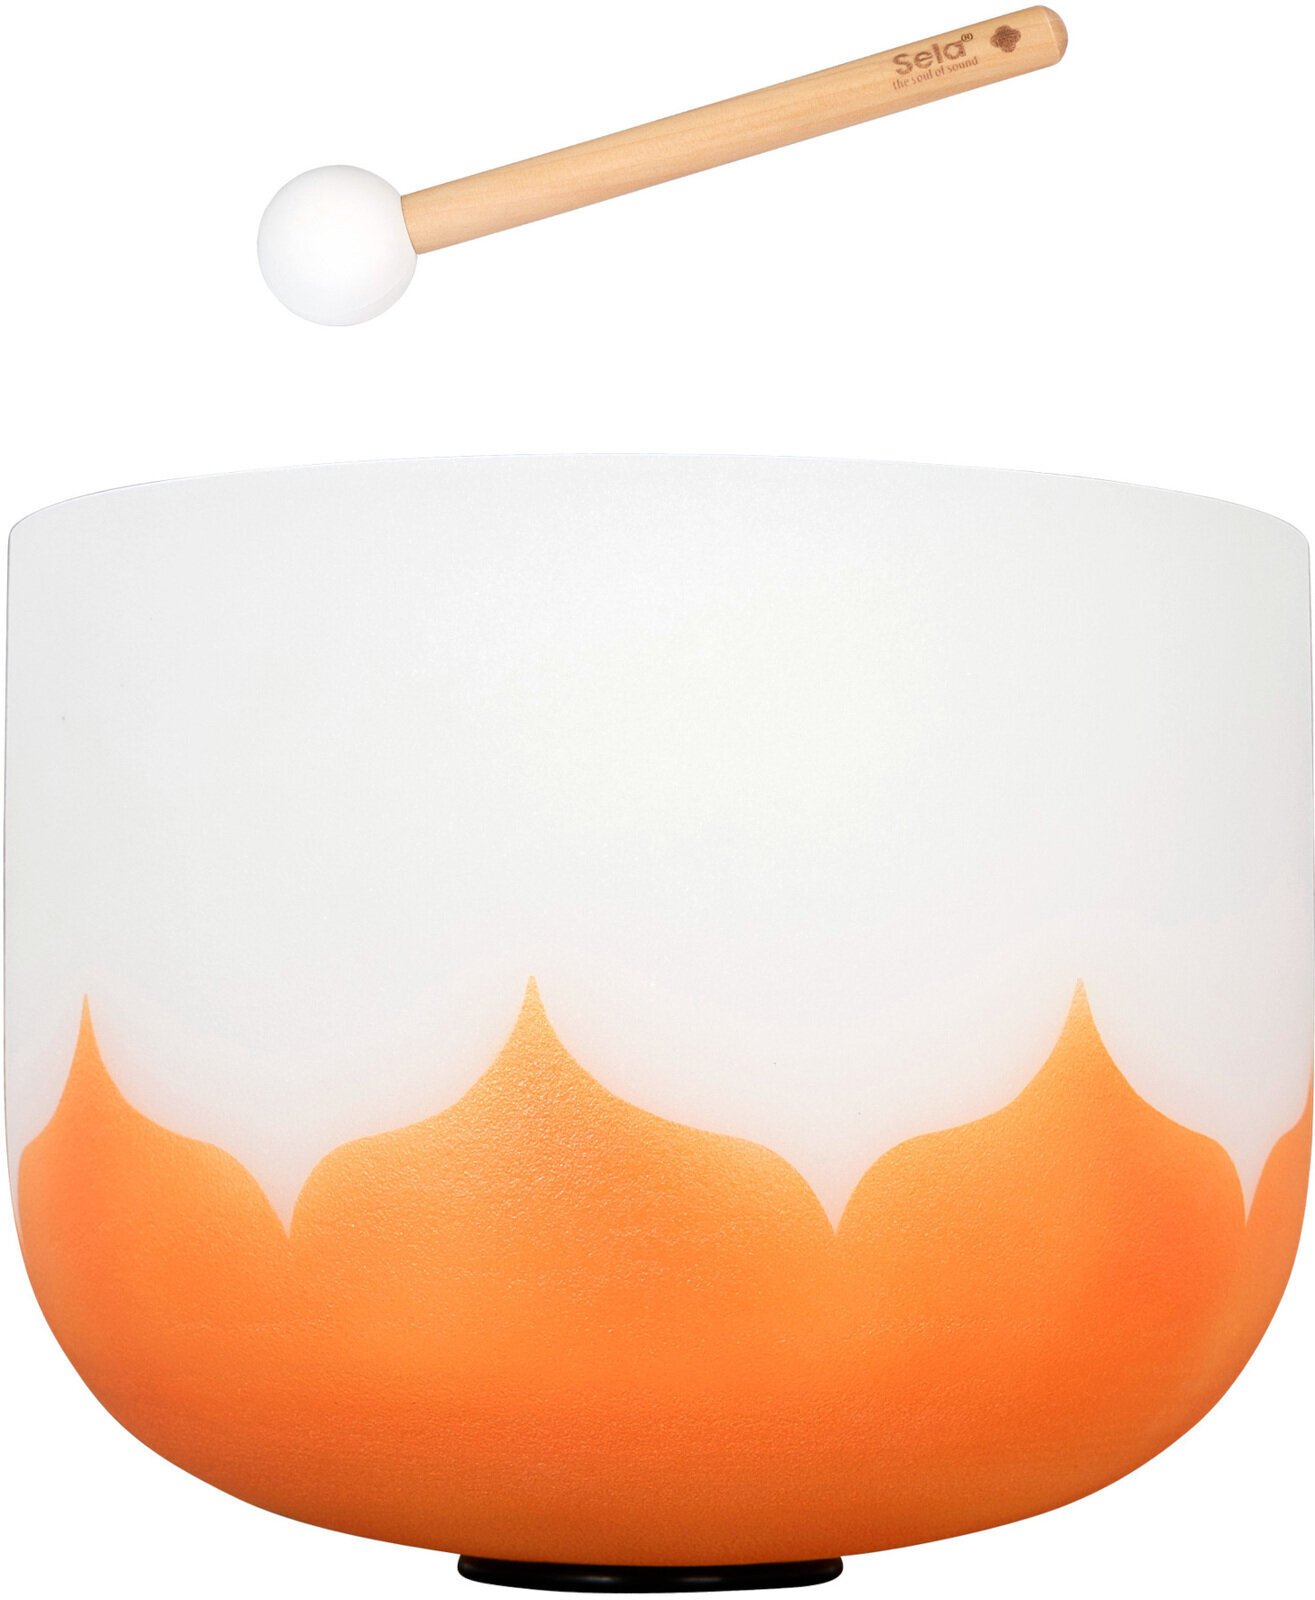 Percussions musicothérapeutiques Sela 13“ Crystal Singing Bowl Set Lotus 432Hz D - Orange (Sacral Chakra)